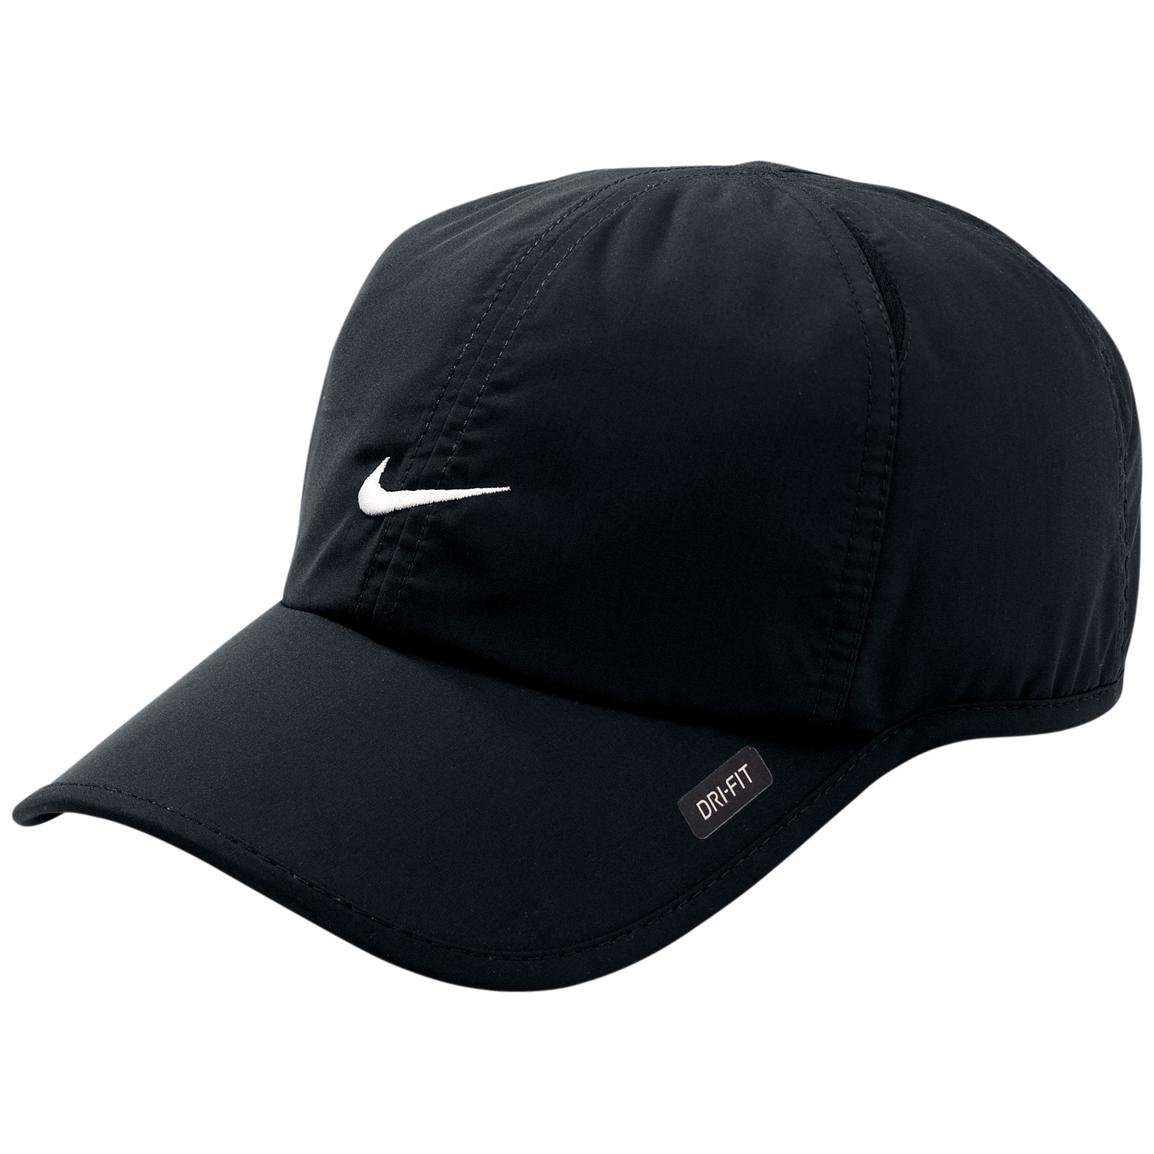 Men's Nike® Feather Light Cap - 143811, Hats & Caps at Sportsman's Guide